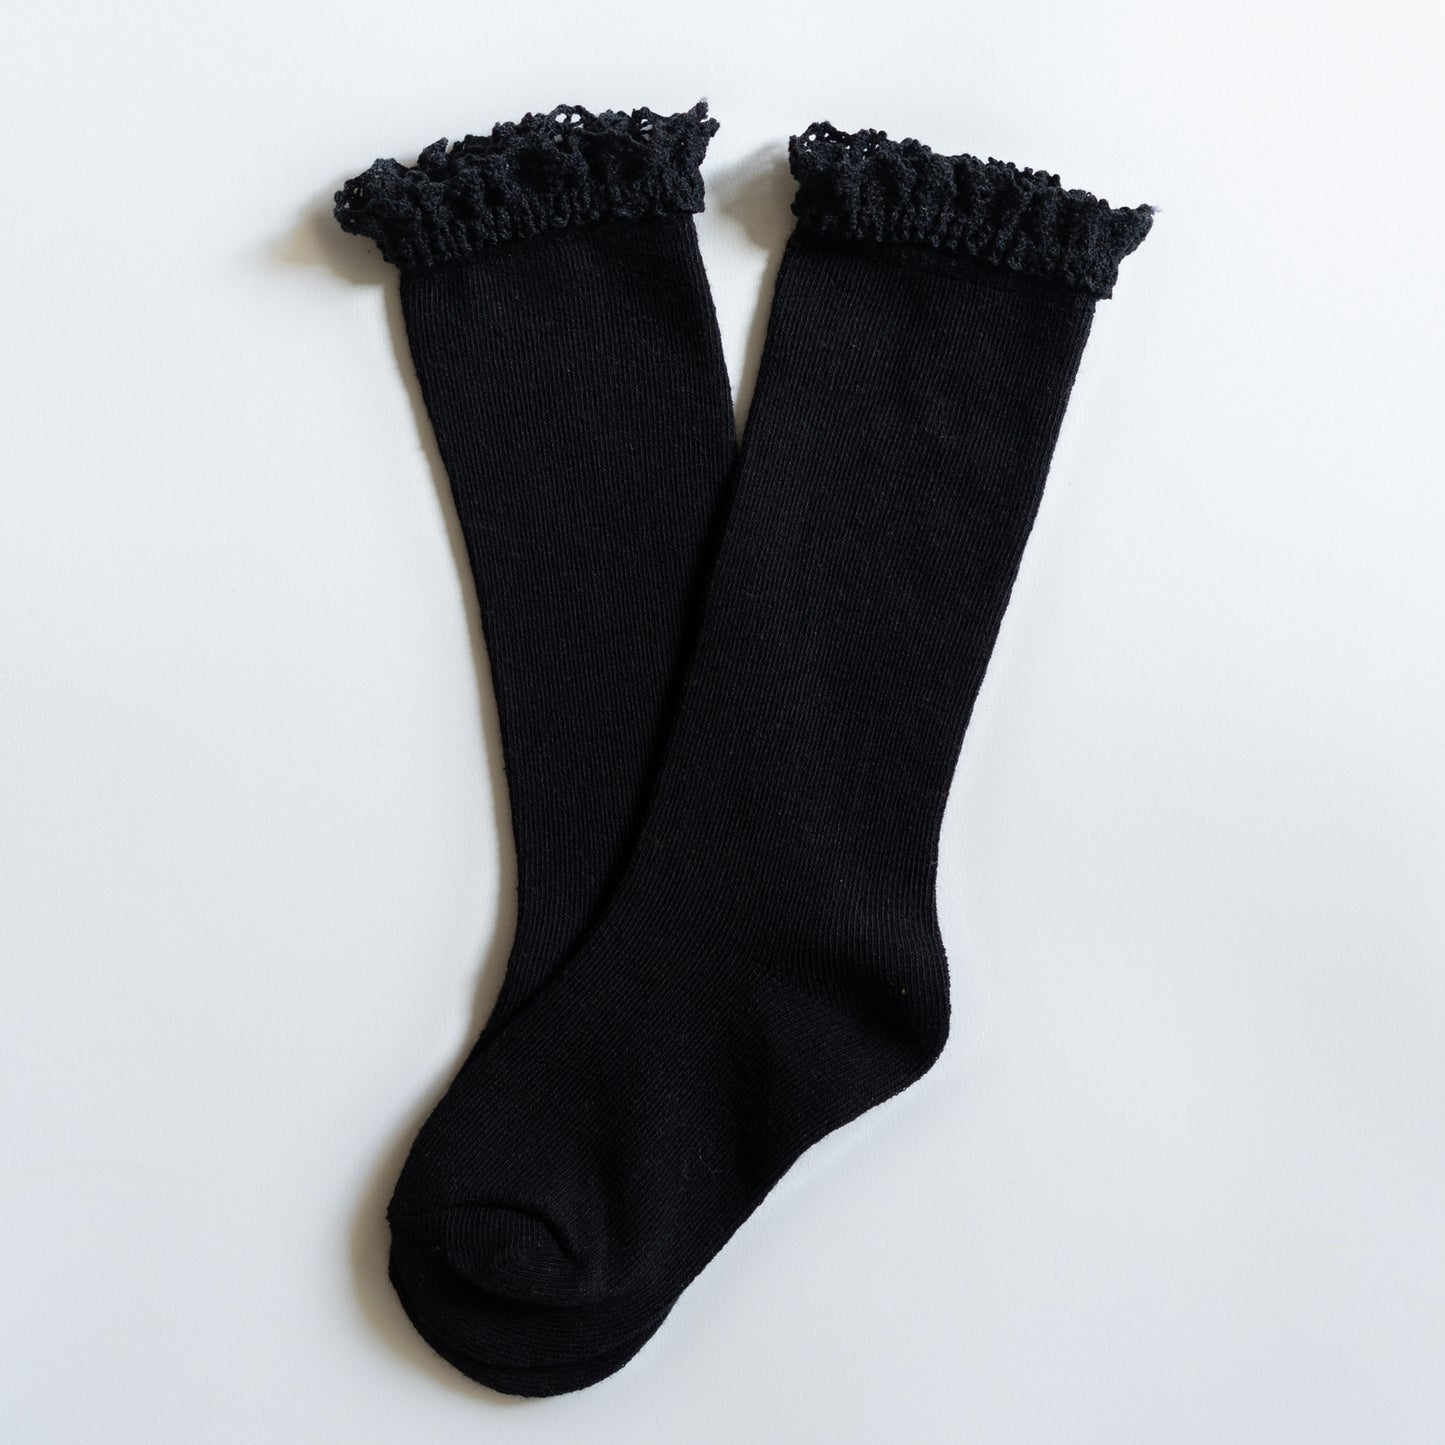 black lace top socks